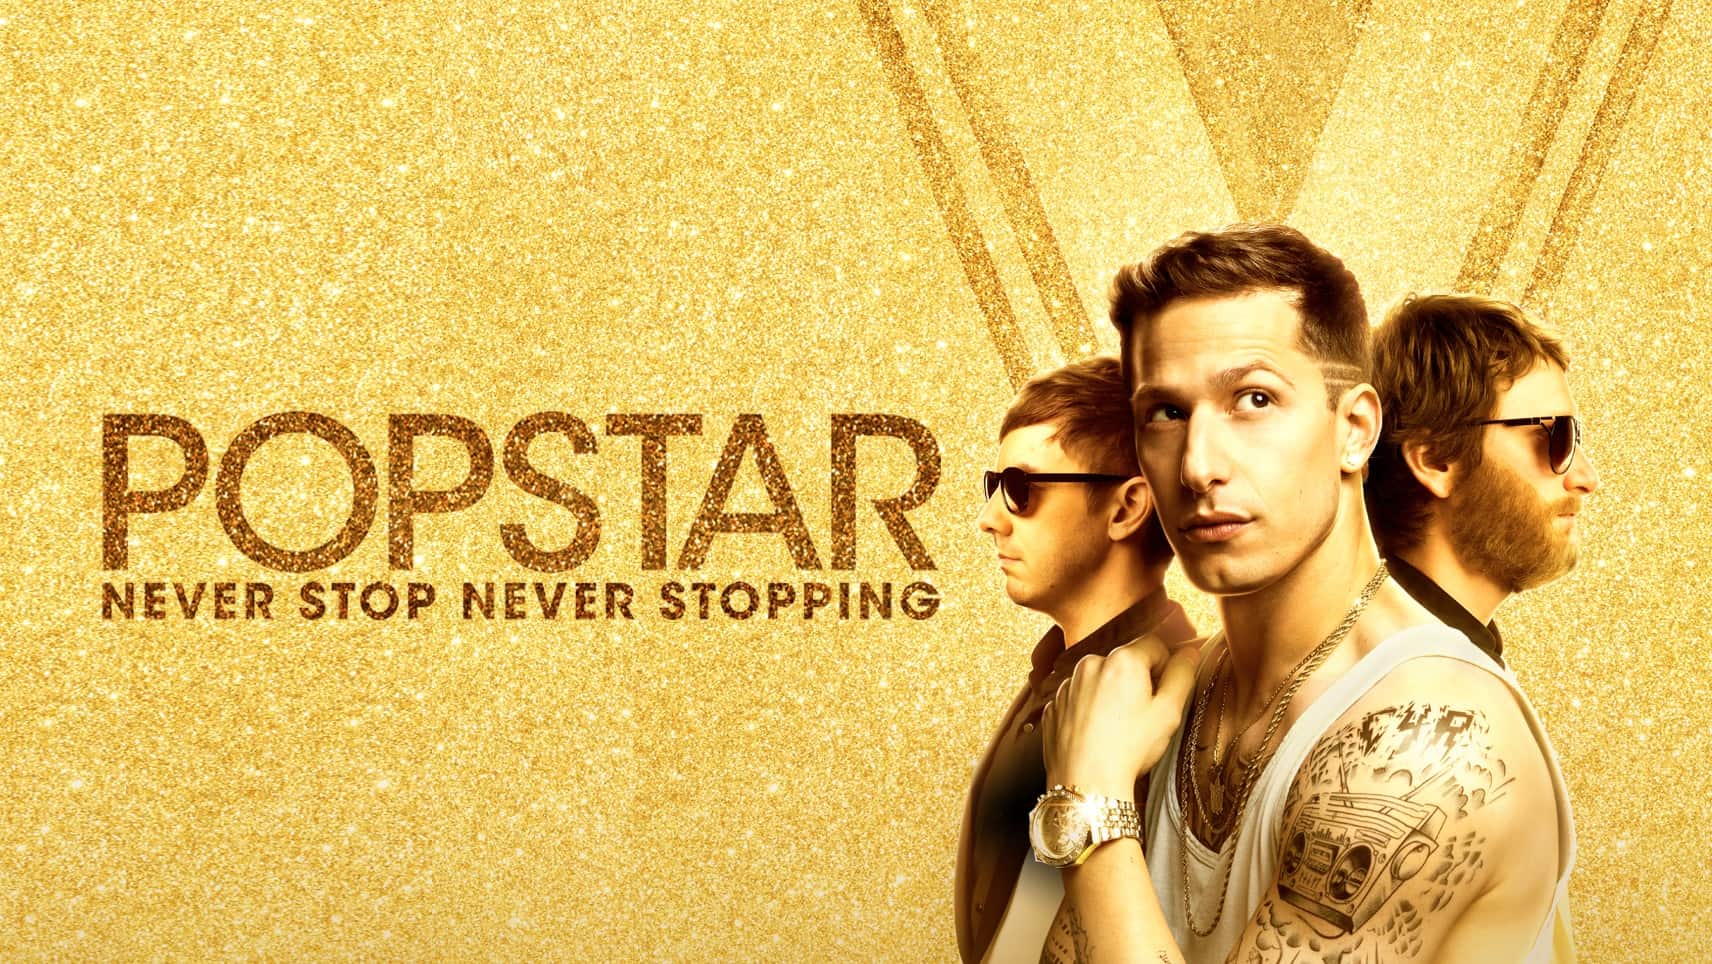 popstar-never-stop.jpg